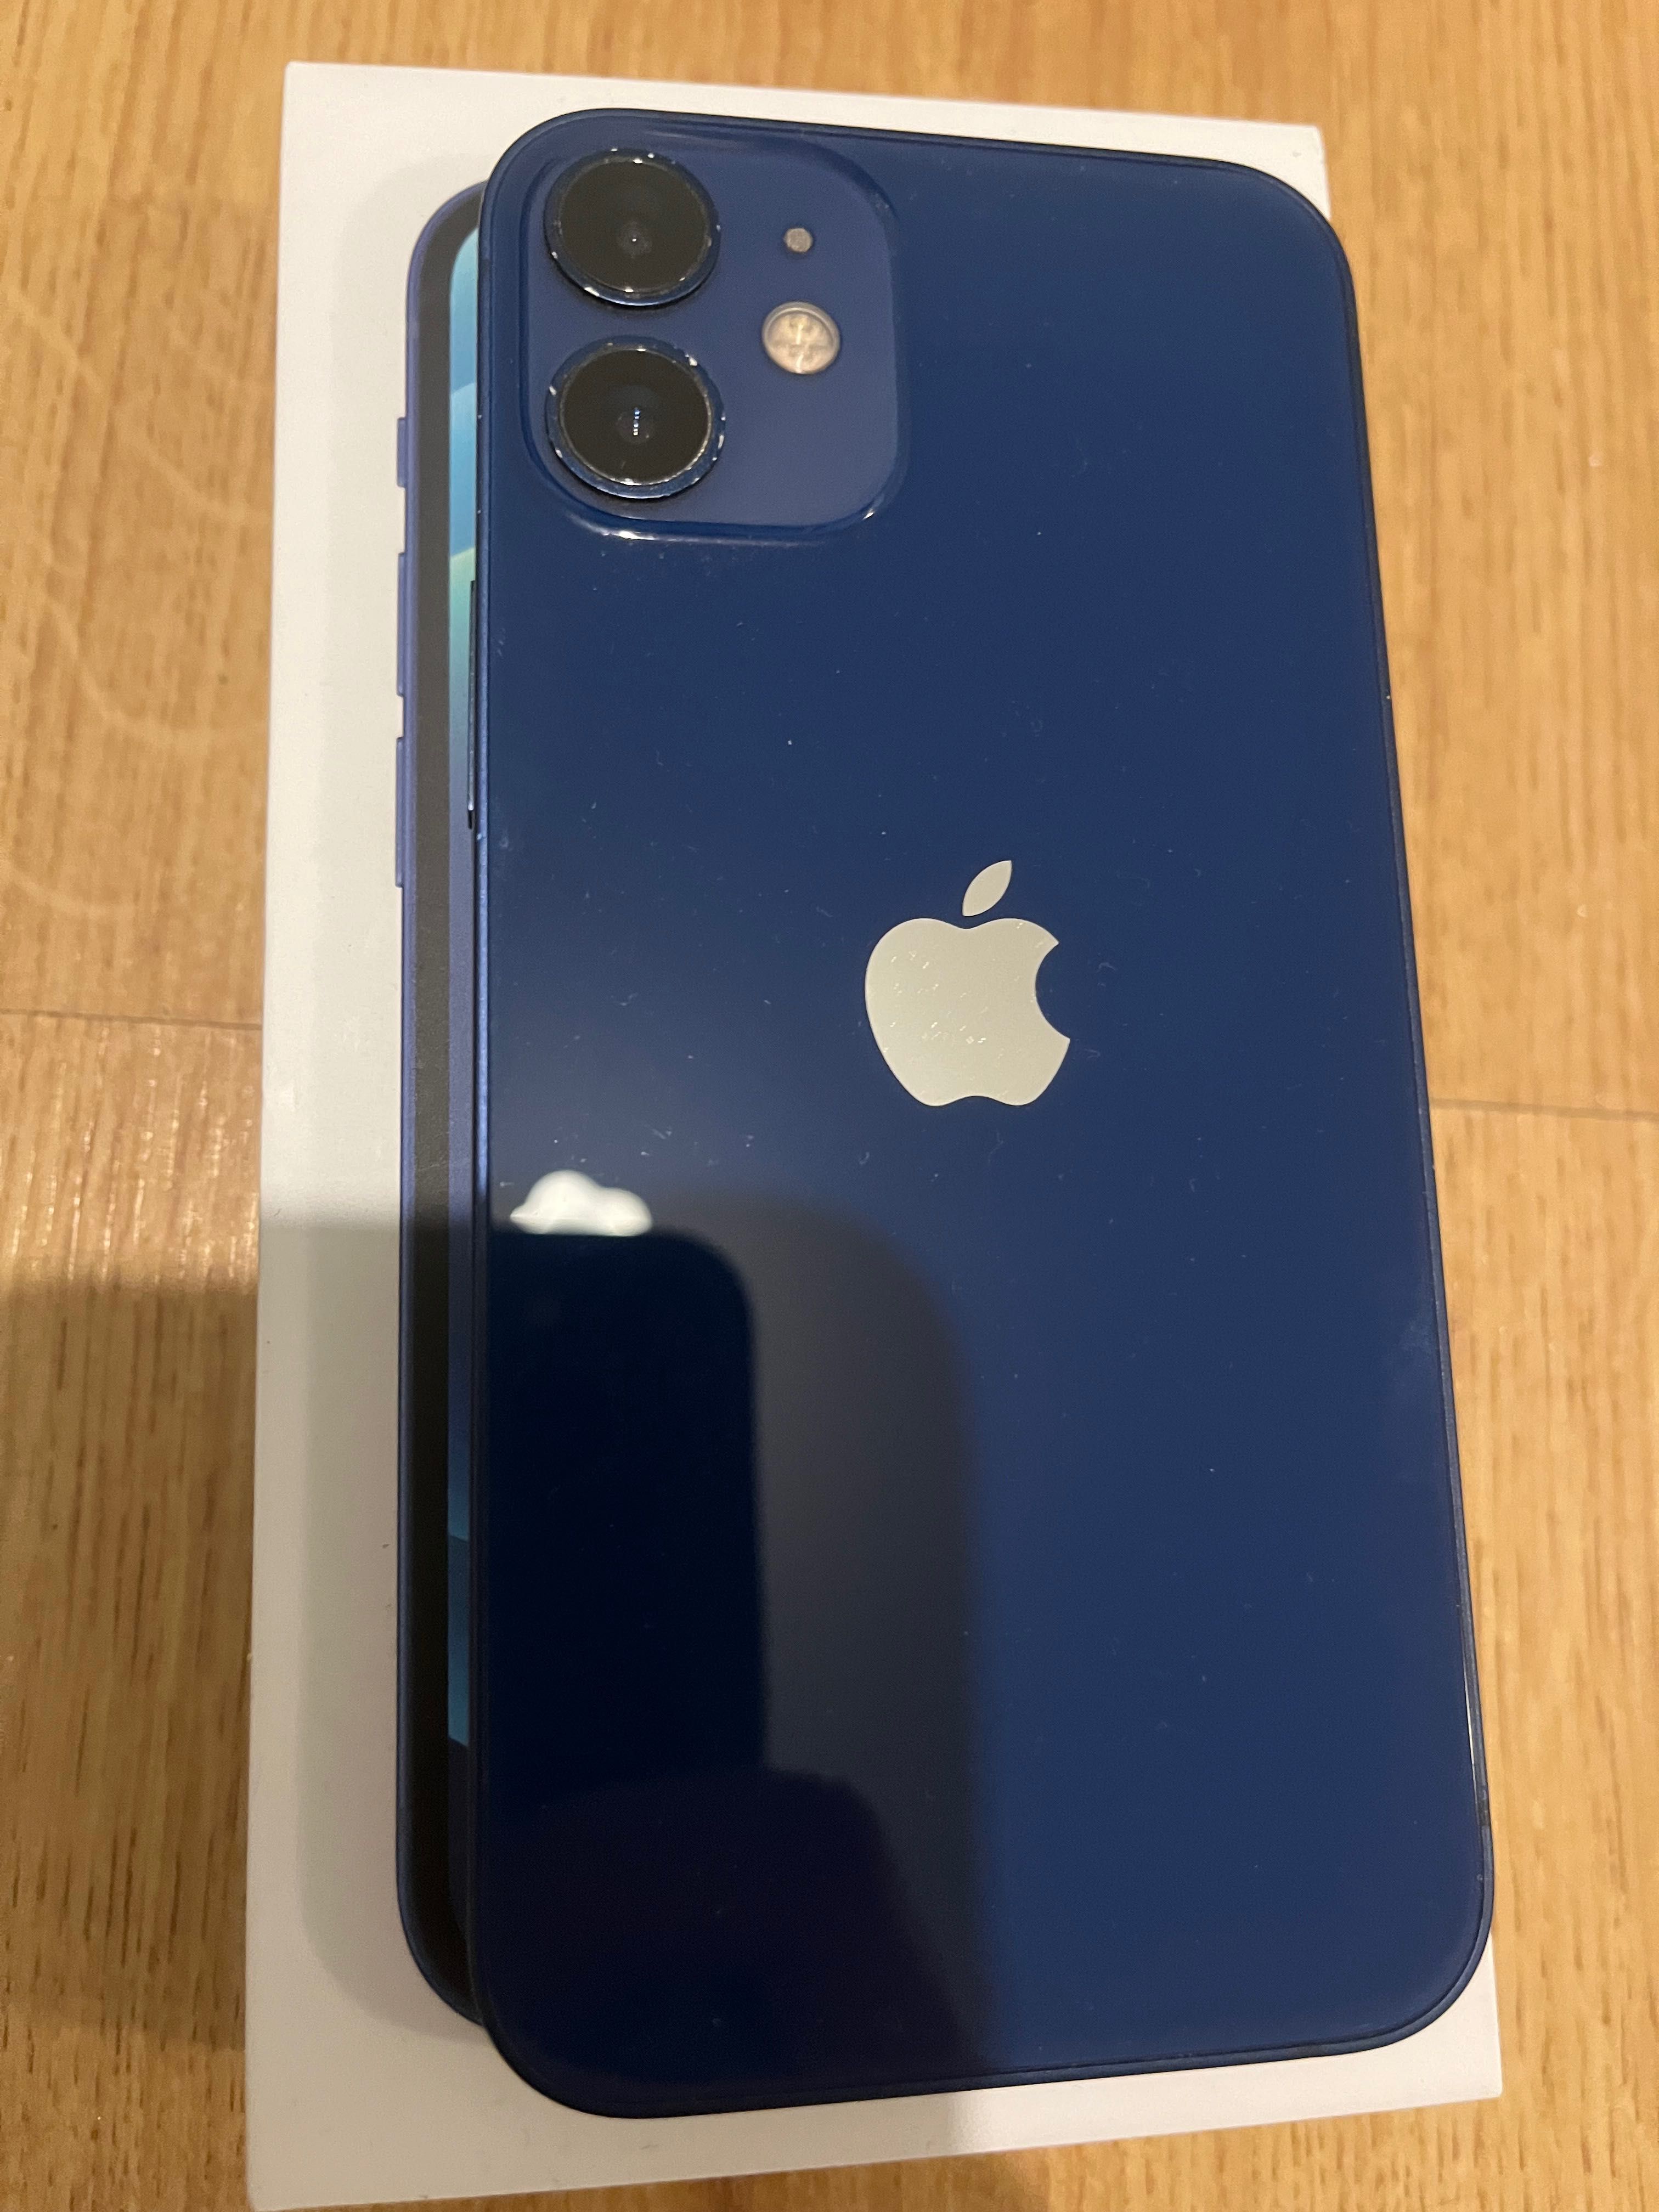 iPhone 12 mini 64 (blue)